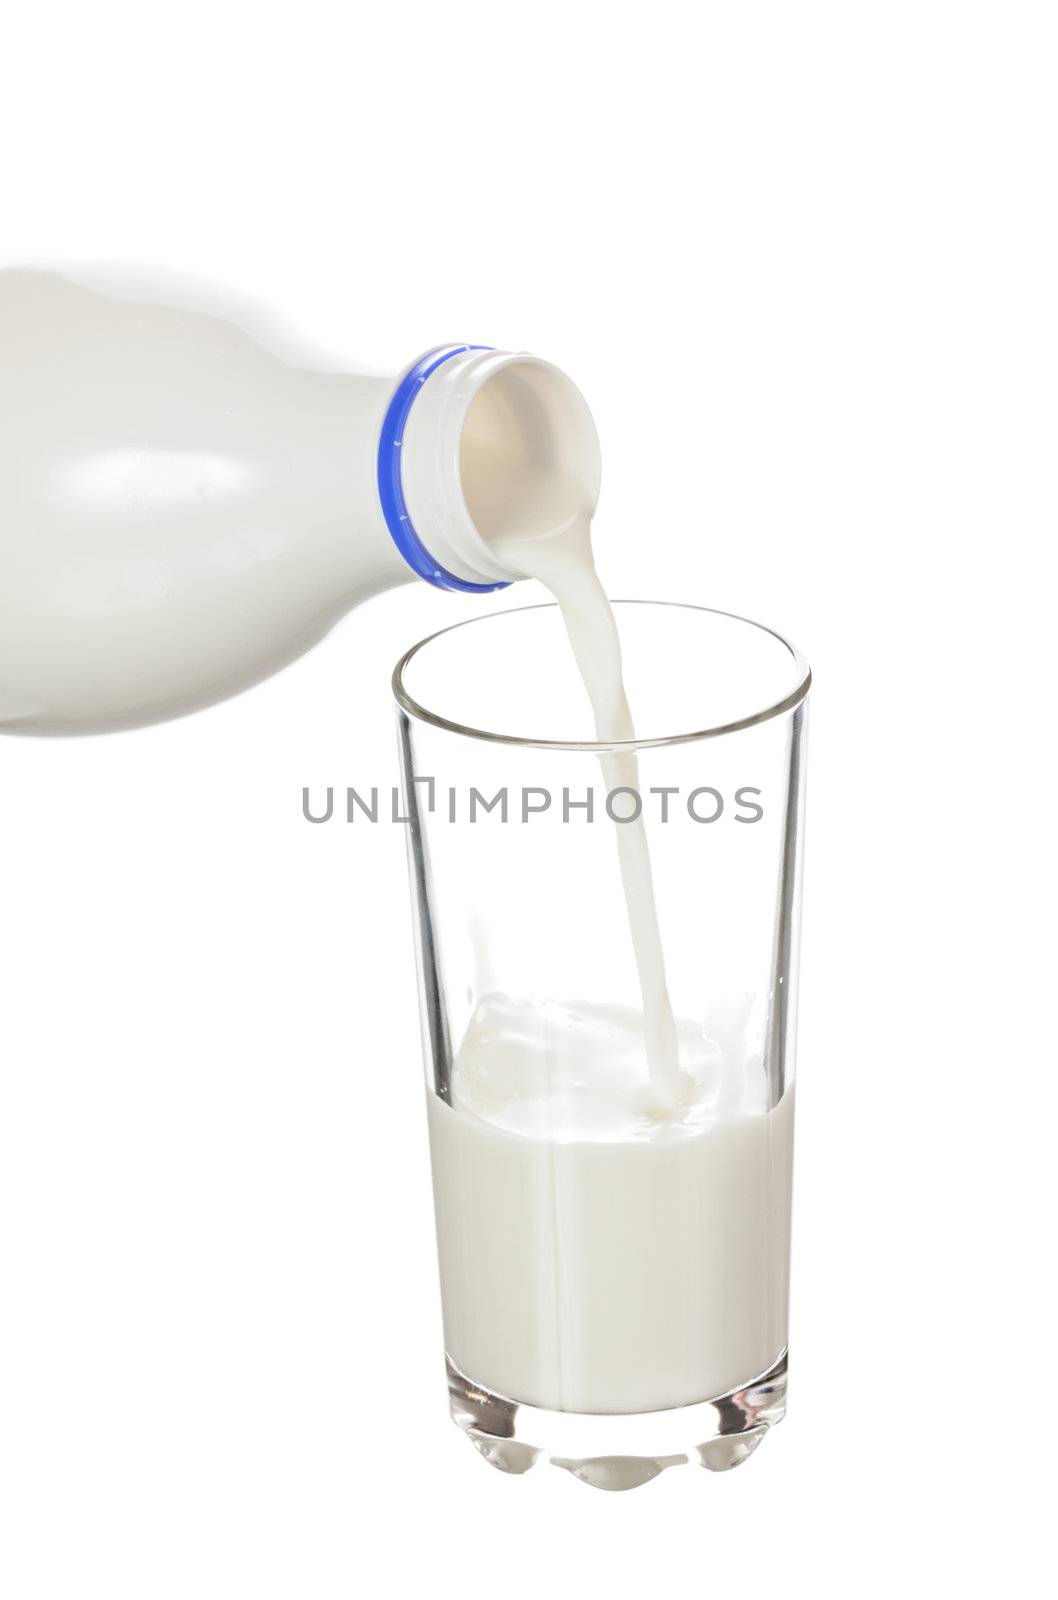 milk by uriy2007